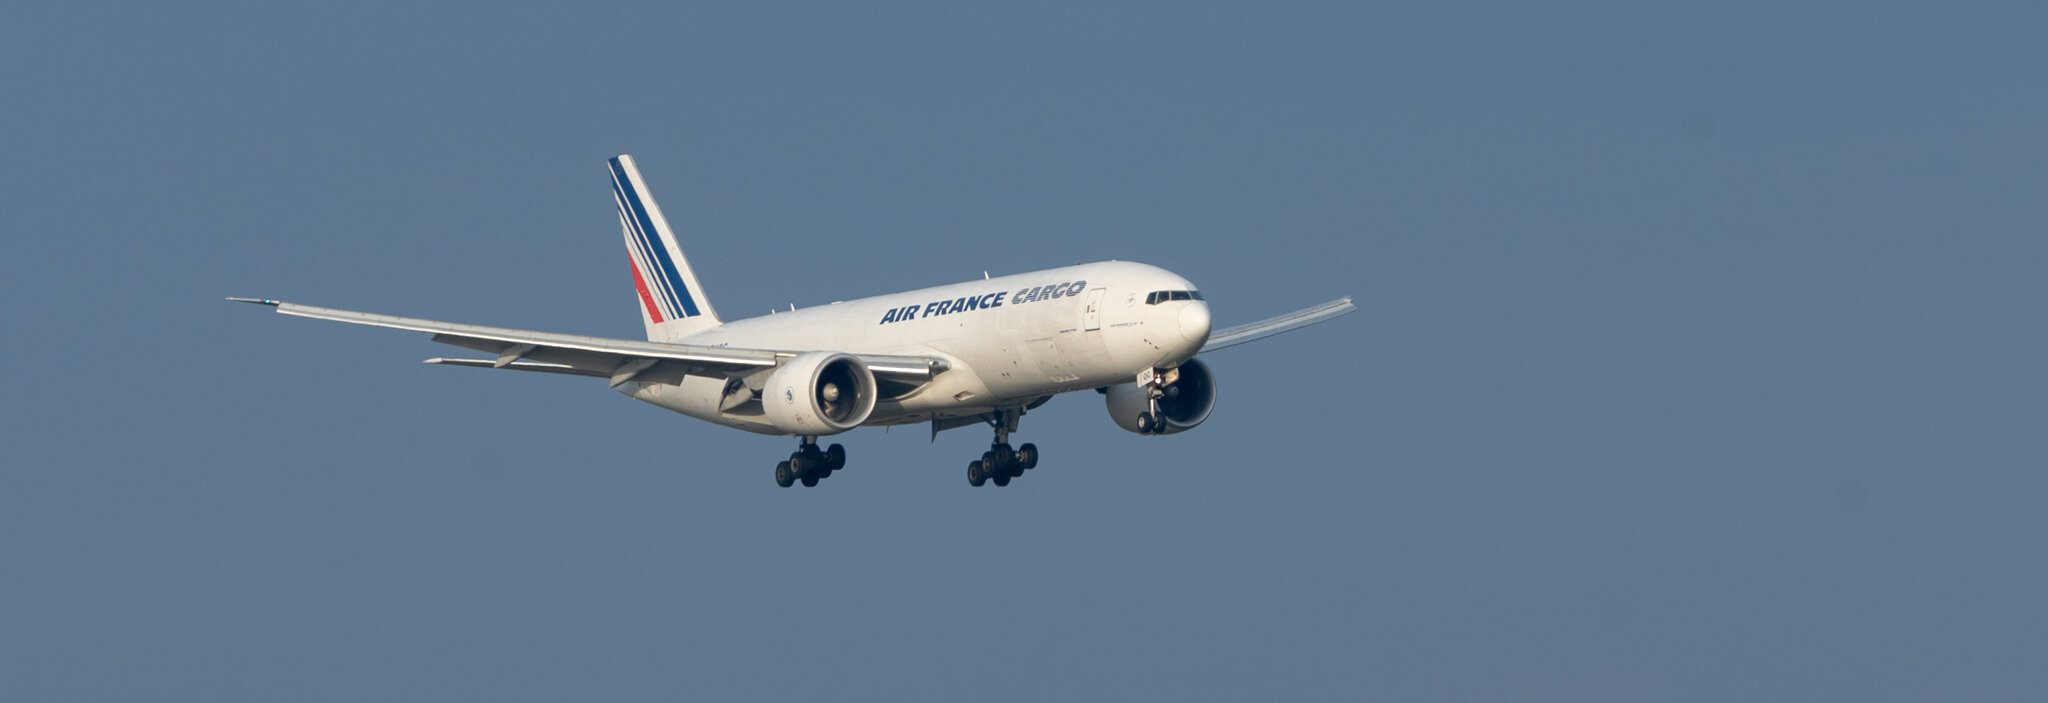 Air France2.jpg